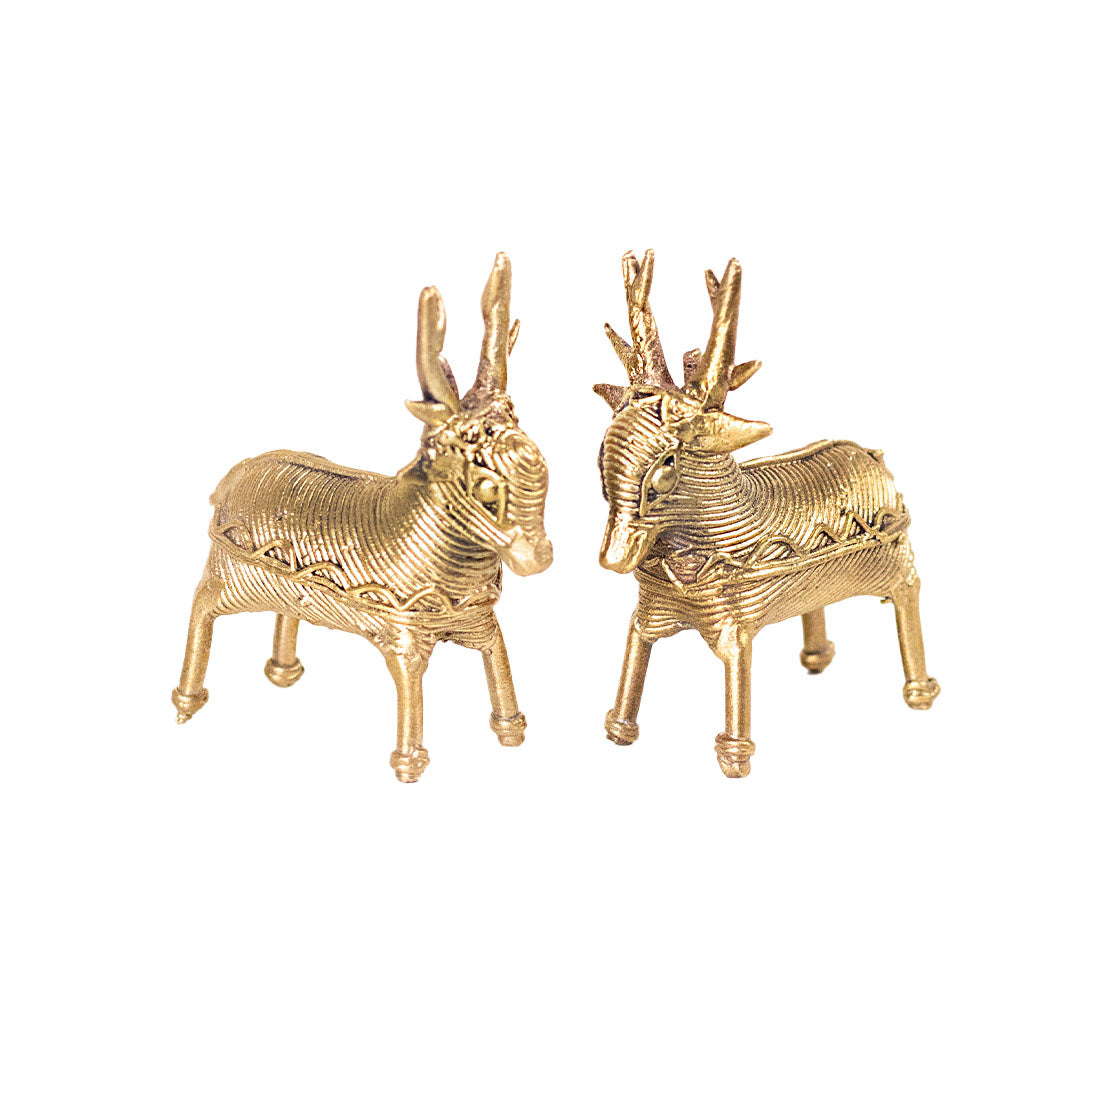 Two Brass Deer Figurines